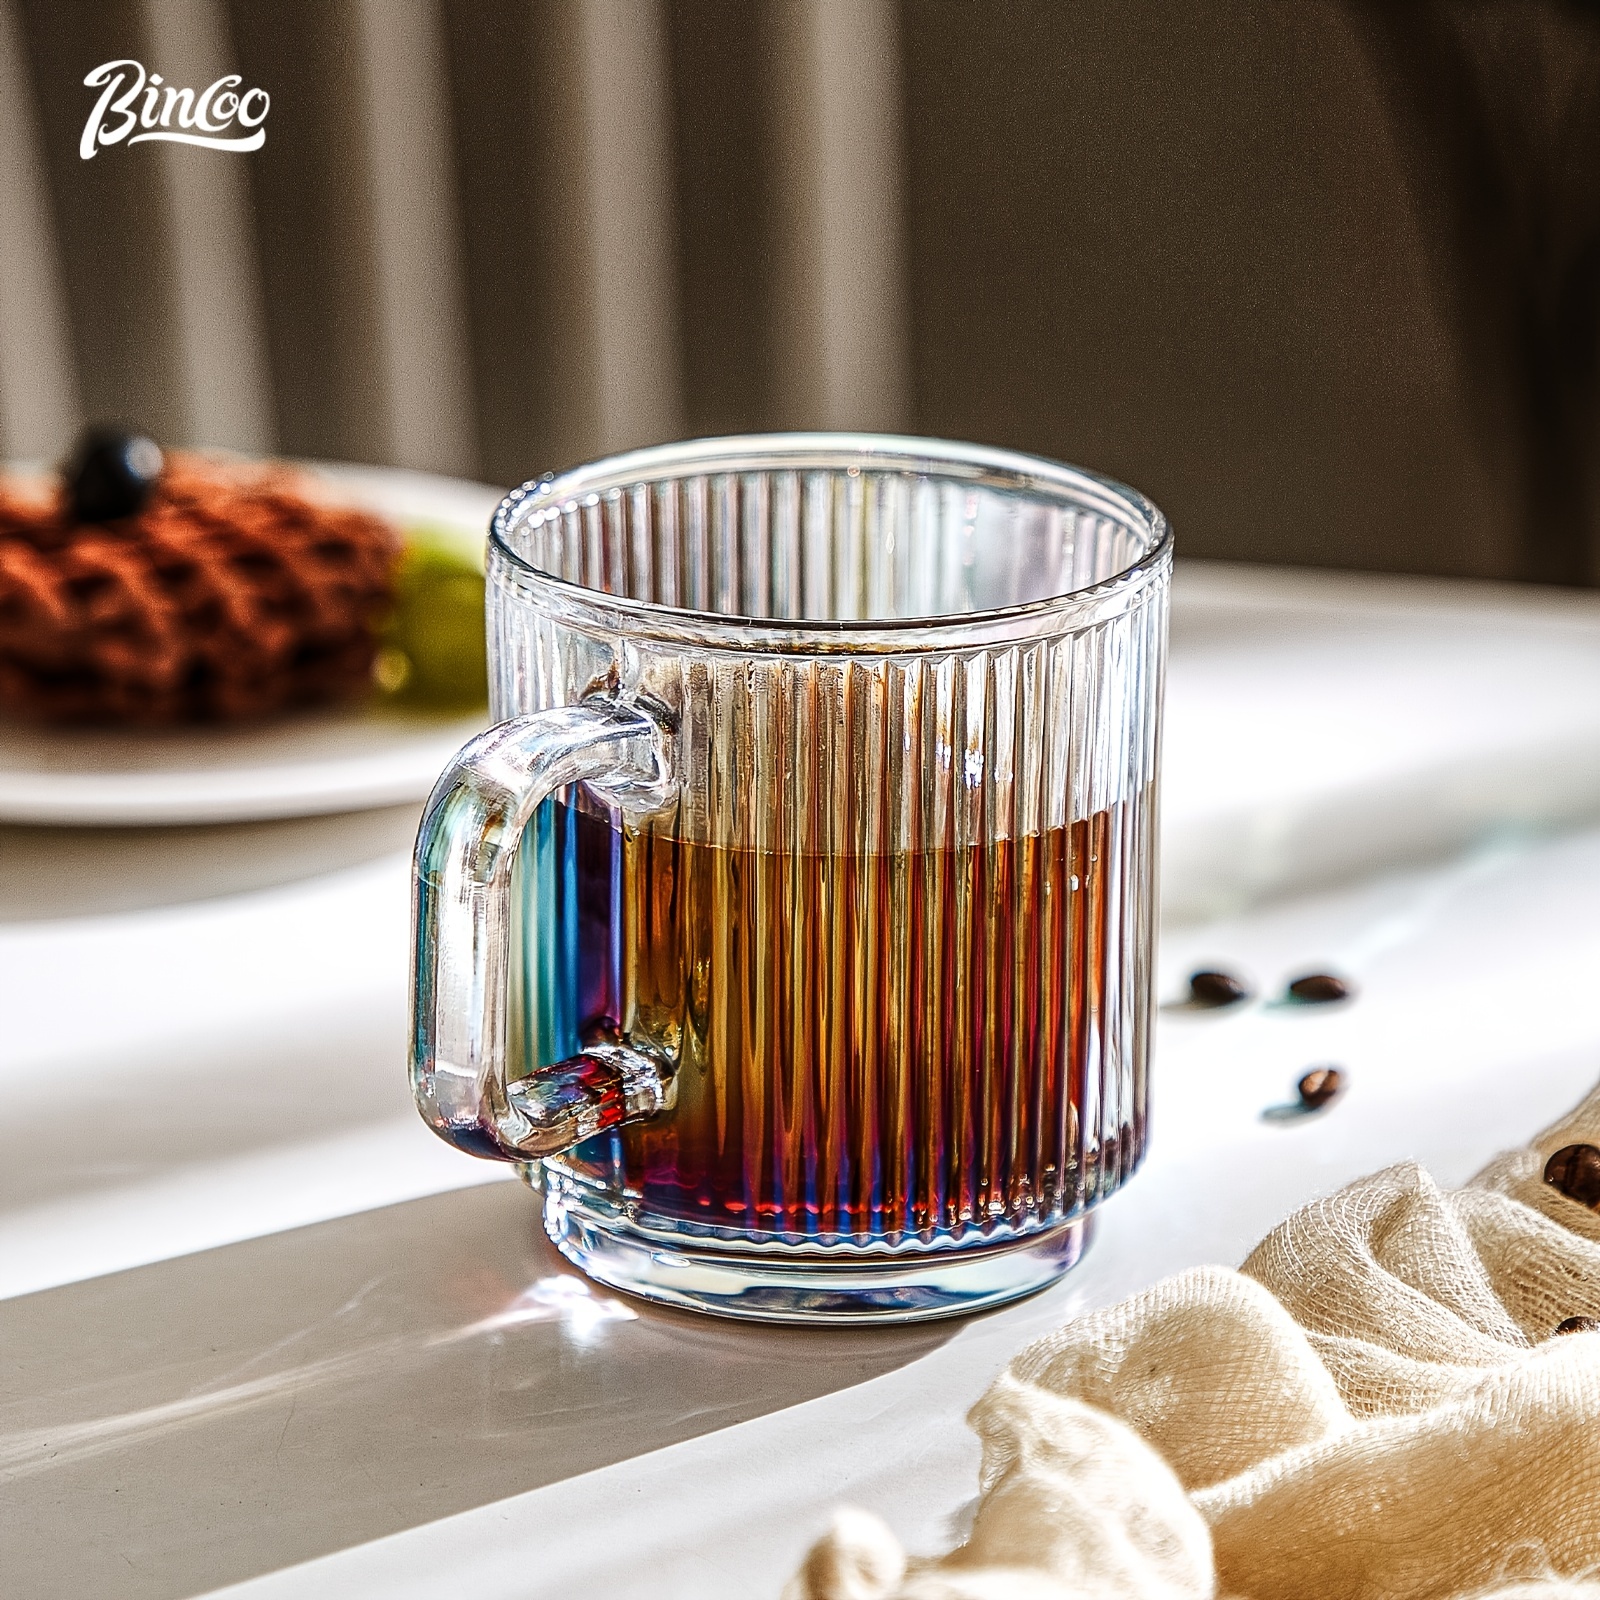 Lysenn Clear Glass Coffee Mug - Classic Vertical Stripes Tea Mug - Elegant  Coffee Cup with Glass Lid…See more Lysenn Clear Glass Coffee Mug - Classic